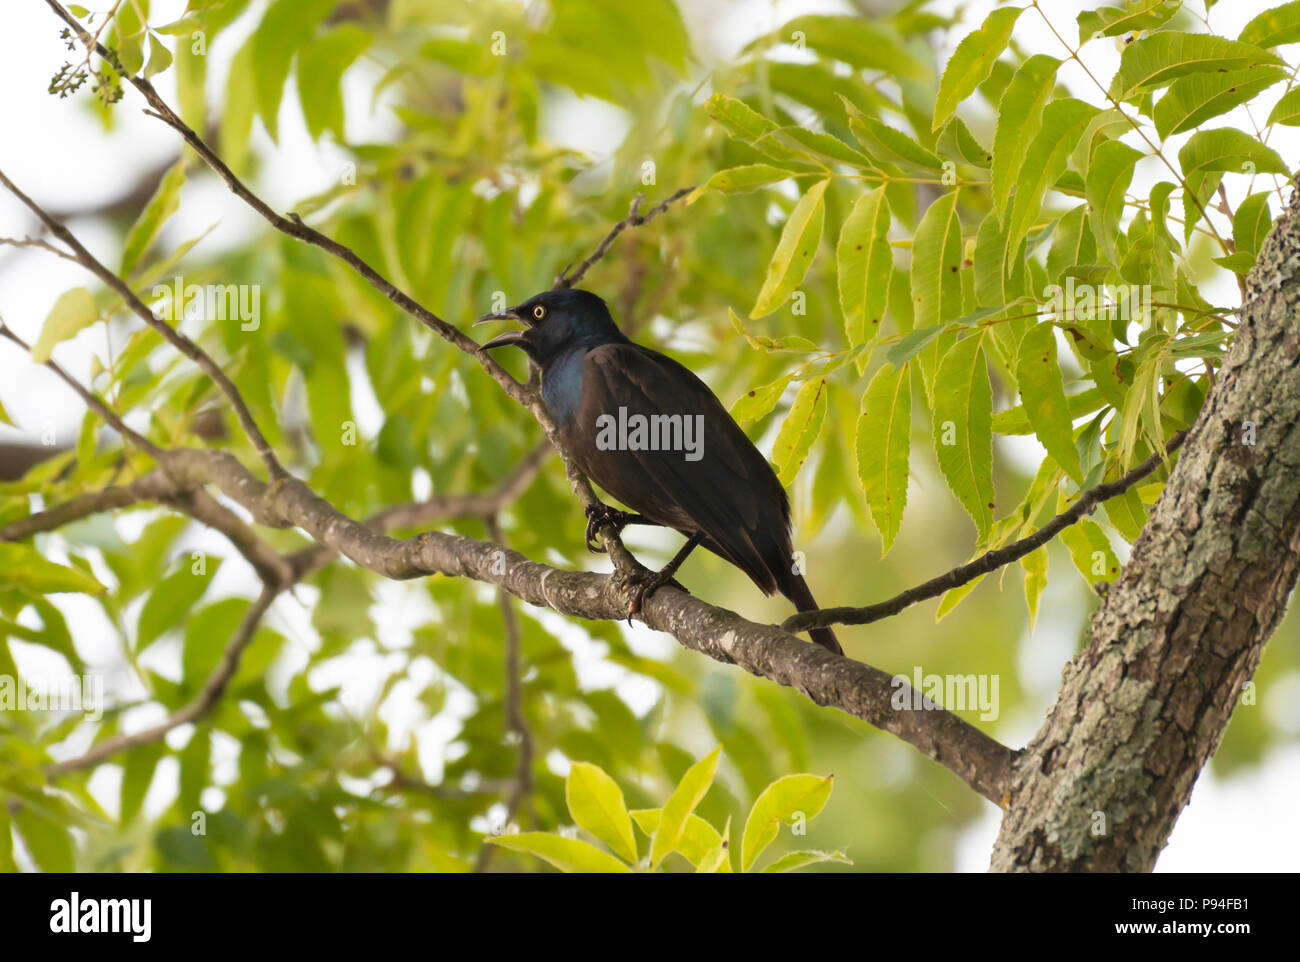 Negro con plumas fotografías e imágenes de alta resolución - Alamy